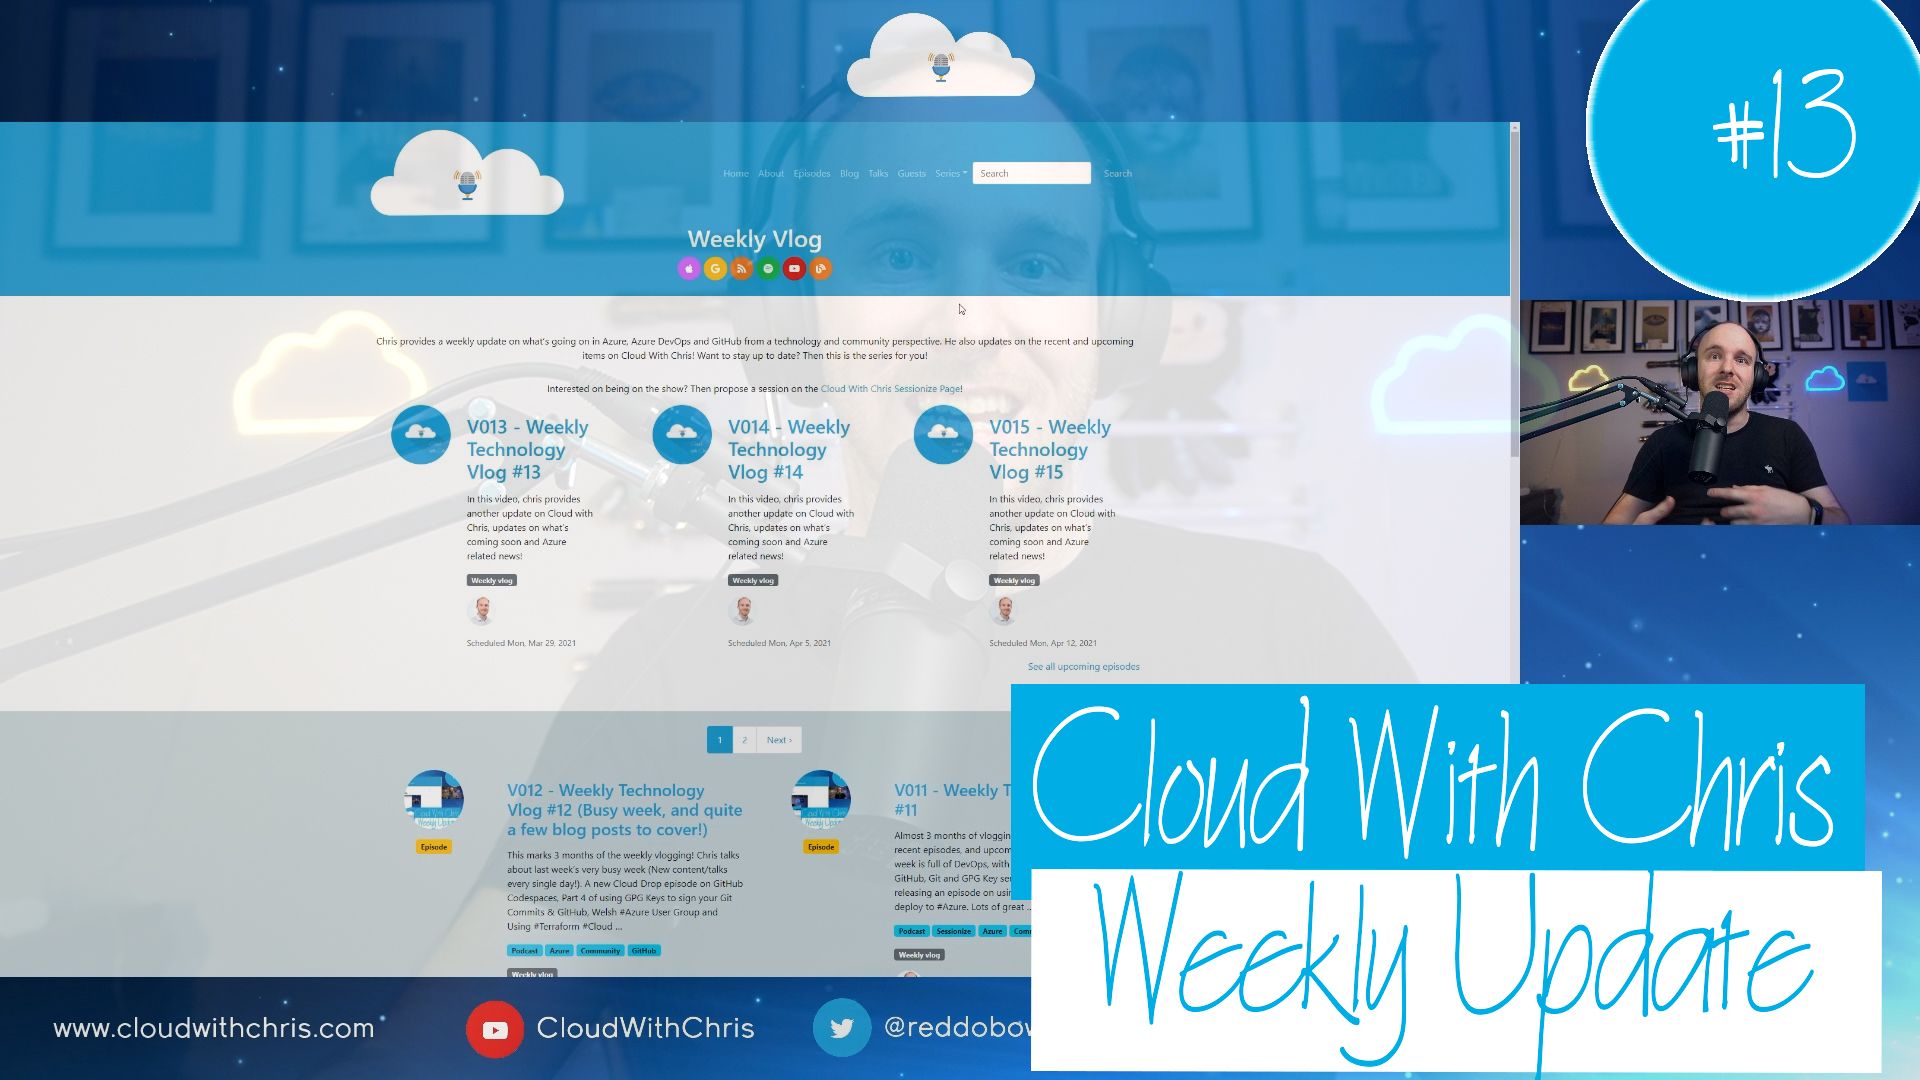 V013 - Weekly Technology Vlog #13 (Lots of Azure, DevOps & GitHub) Blogs, Quick-fire Azure Updates